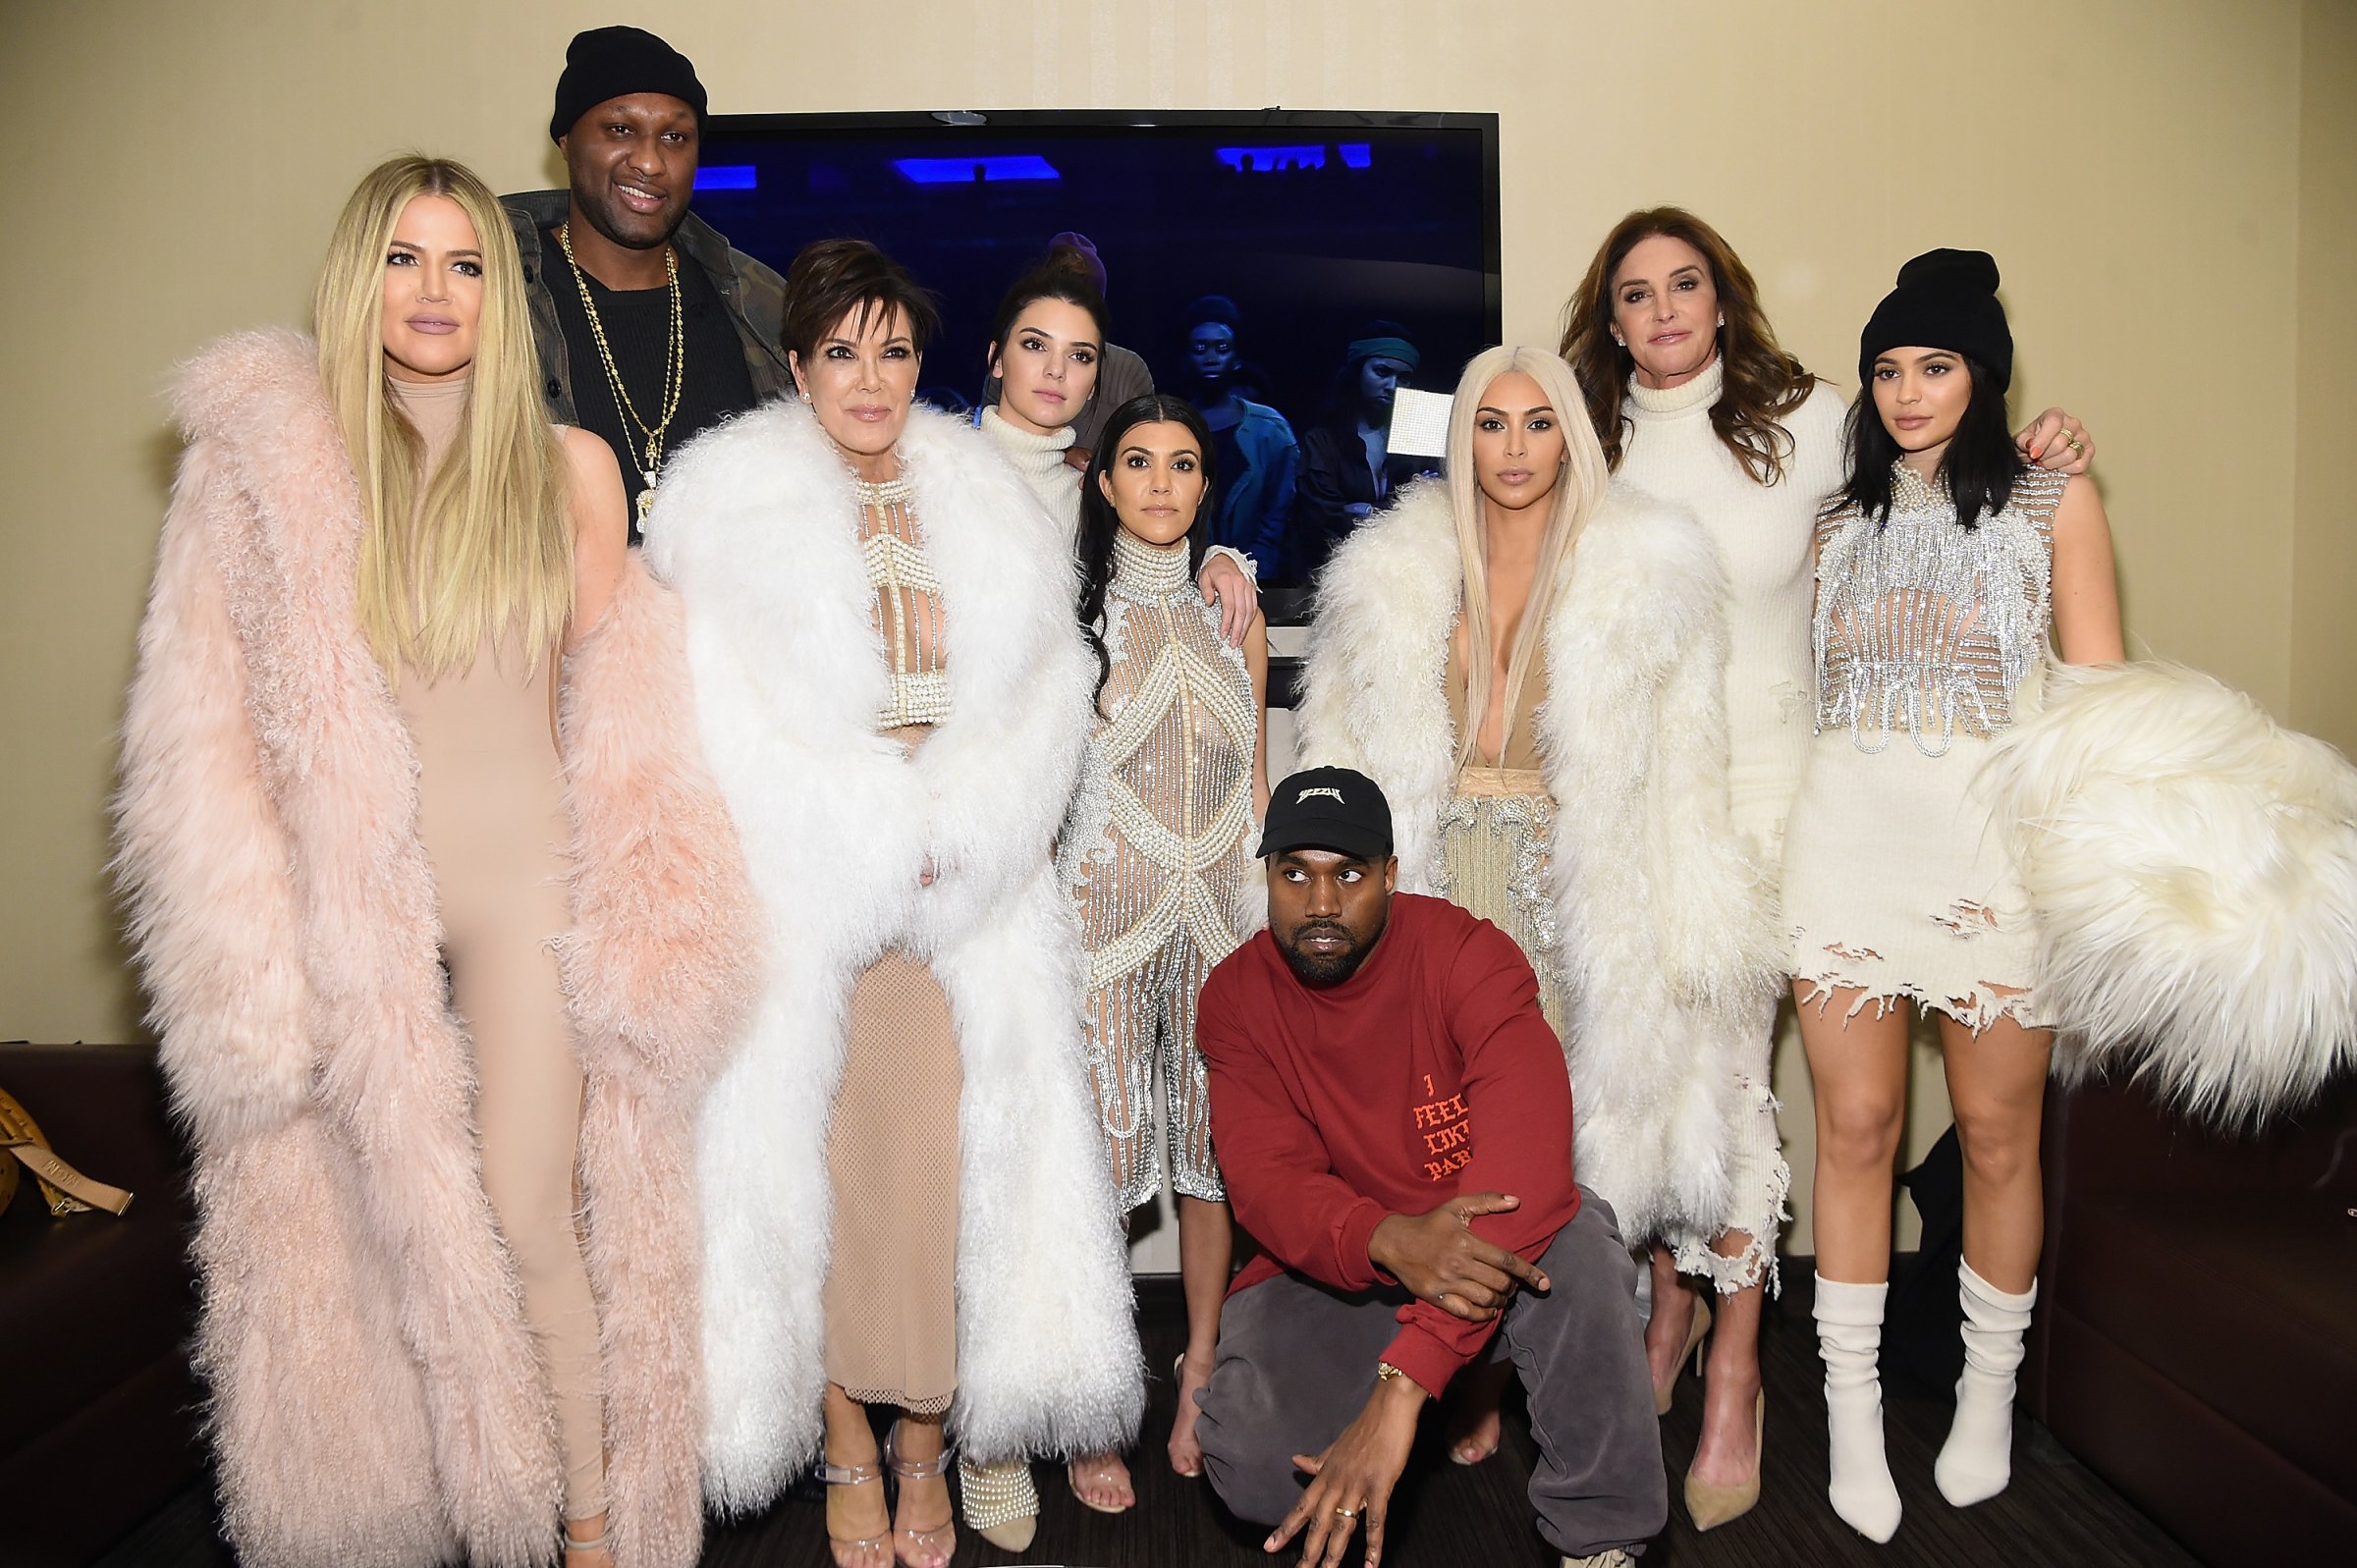 Khloe Kardashian, Lamar Odom, Kris Jenner, Kendall Jenner, Kourtney Kardashian, Kanye West, Kim Kardashian, Caitlin Jenner and Kylie Jenner attend Kanye West Yeezy Season 3 on February 11, 2016 in New York City.